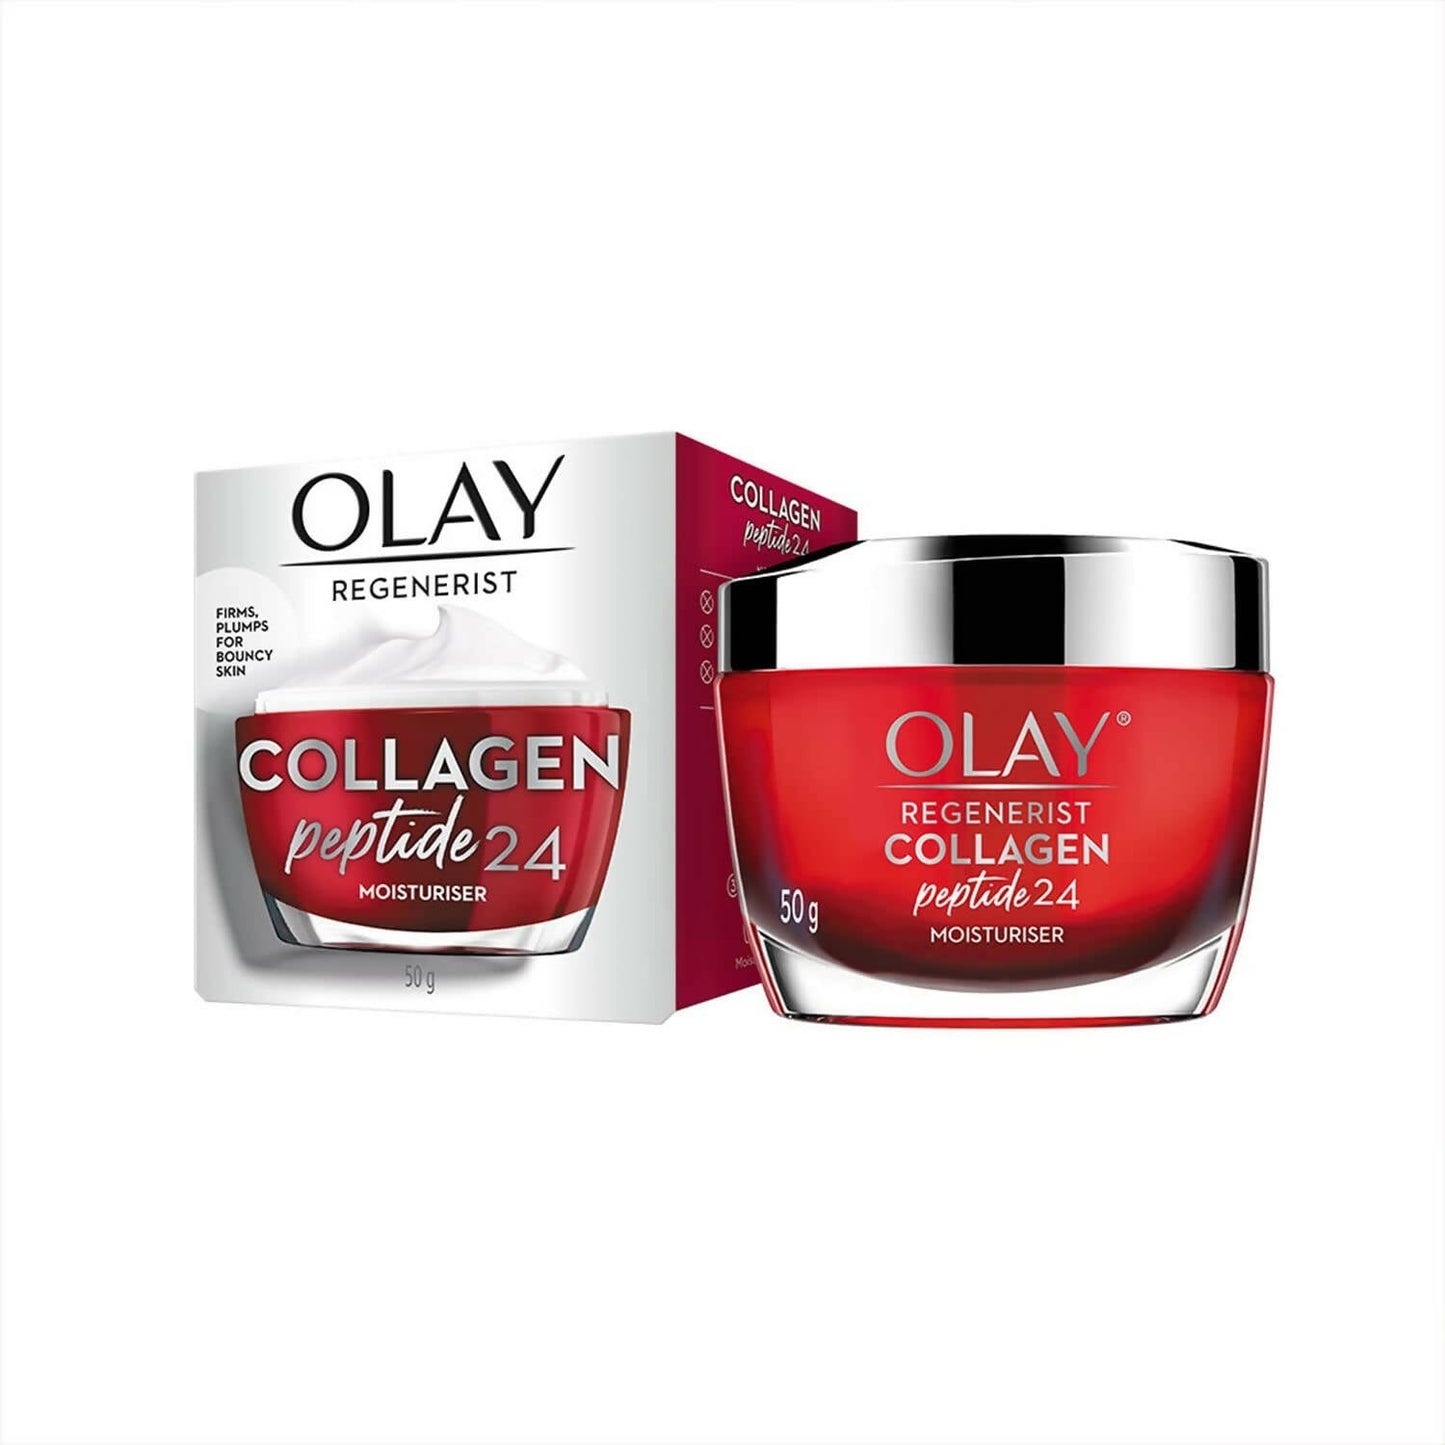 Olay Regenerist Collagen Peptide 24 Face Cream